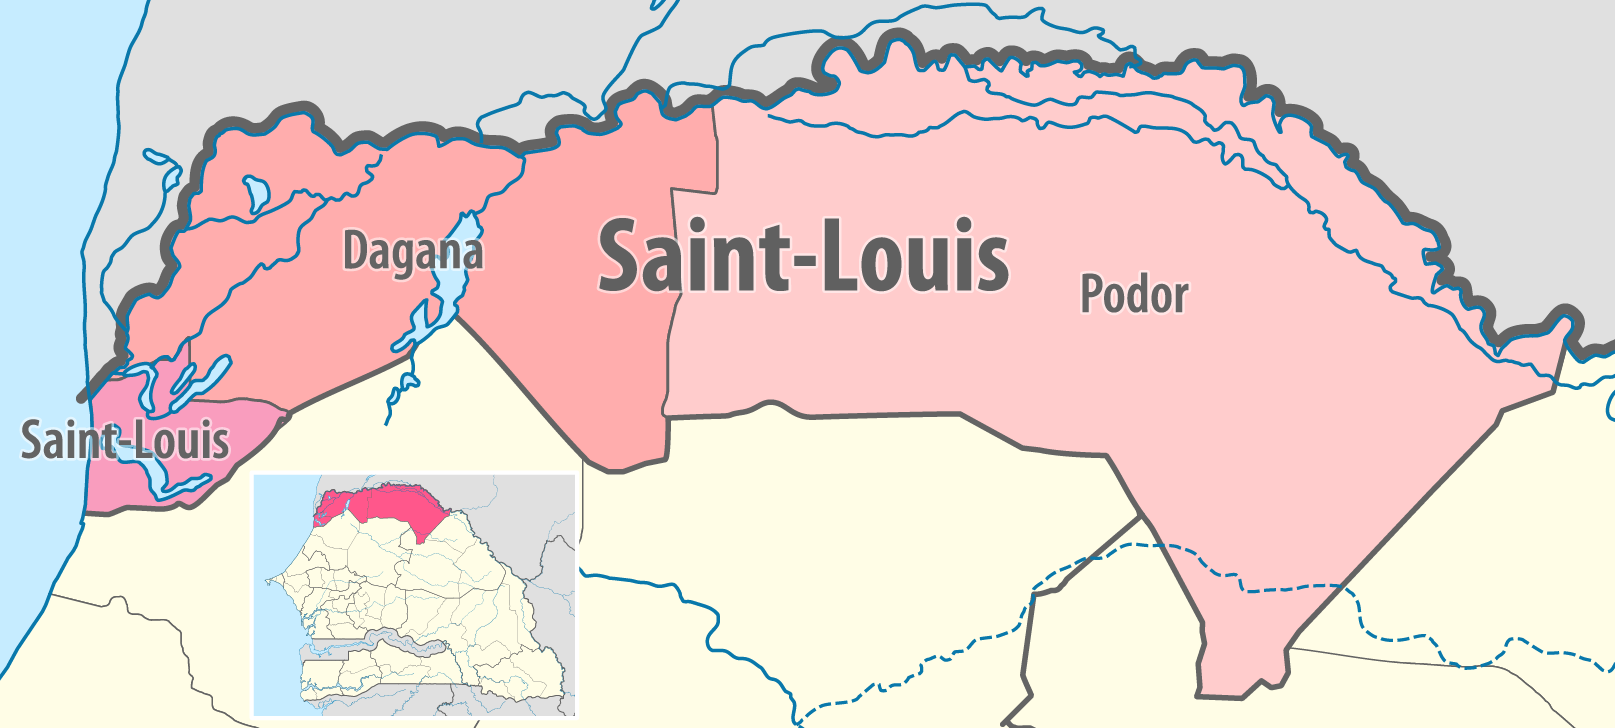 Saint Louis Senegal Map File:map Of The Departments Of The Saint-Louis Region Of Senegal.png -  Wikimedia Commons